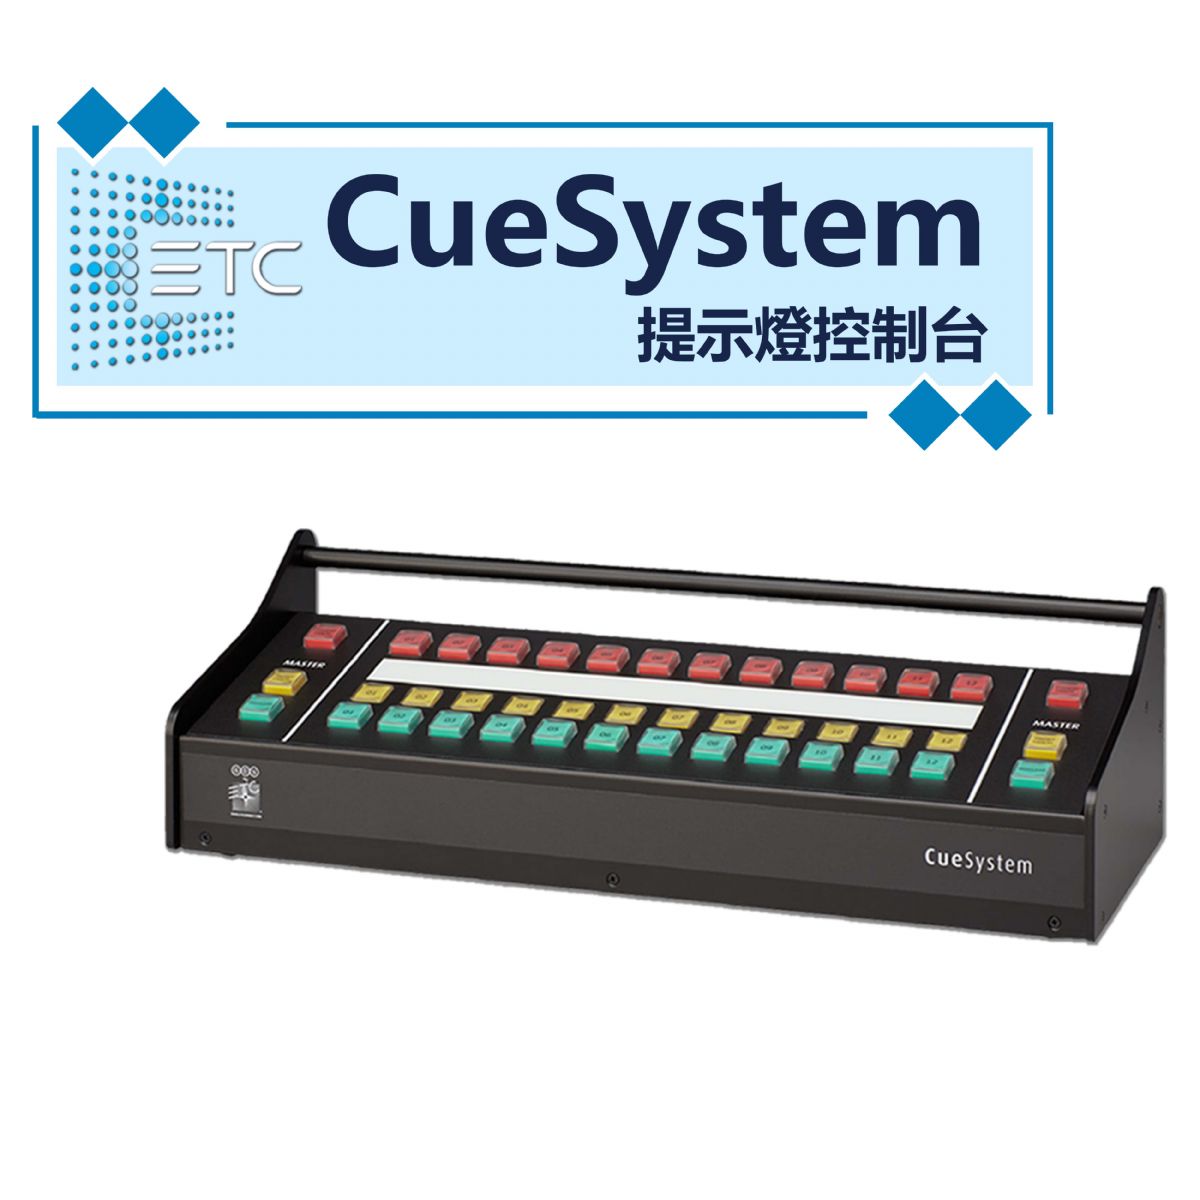 ETC CueSystem指示燈控制台